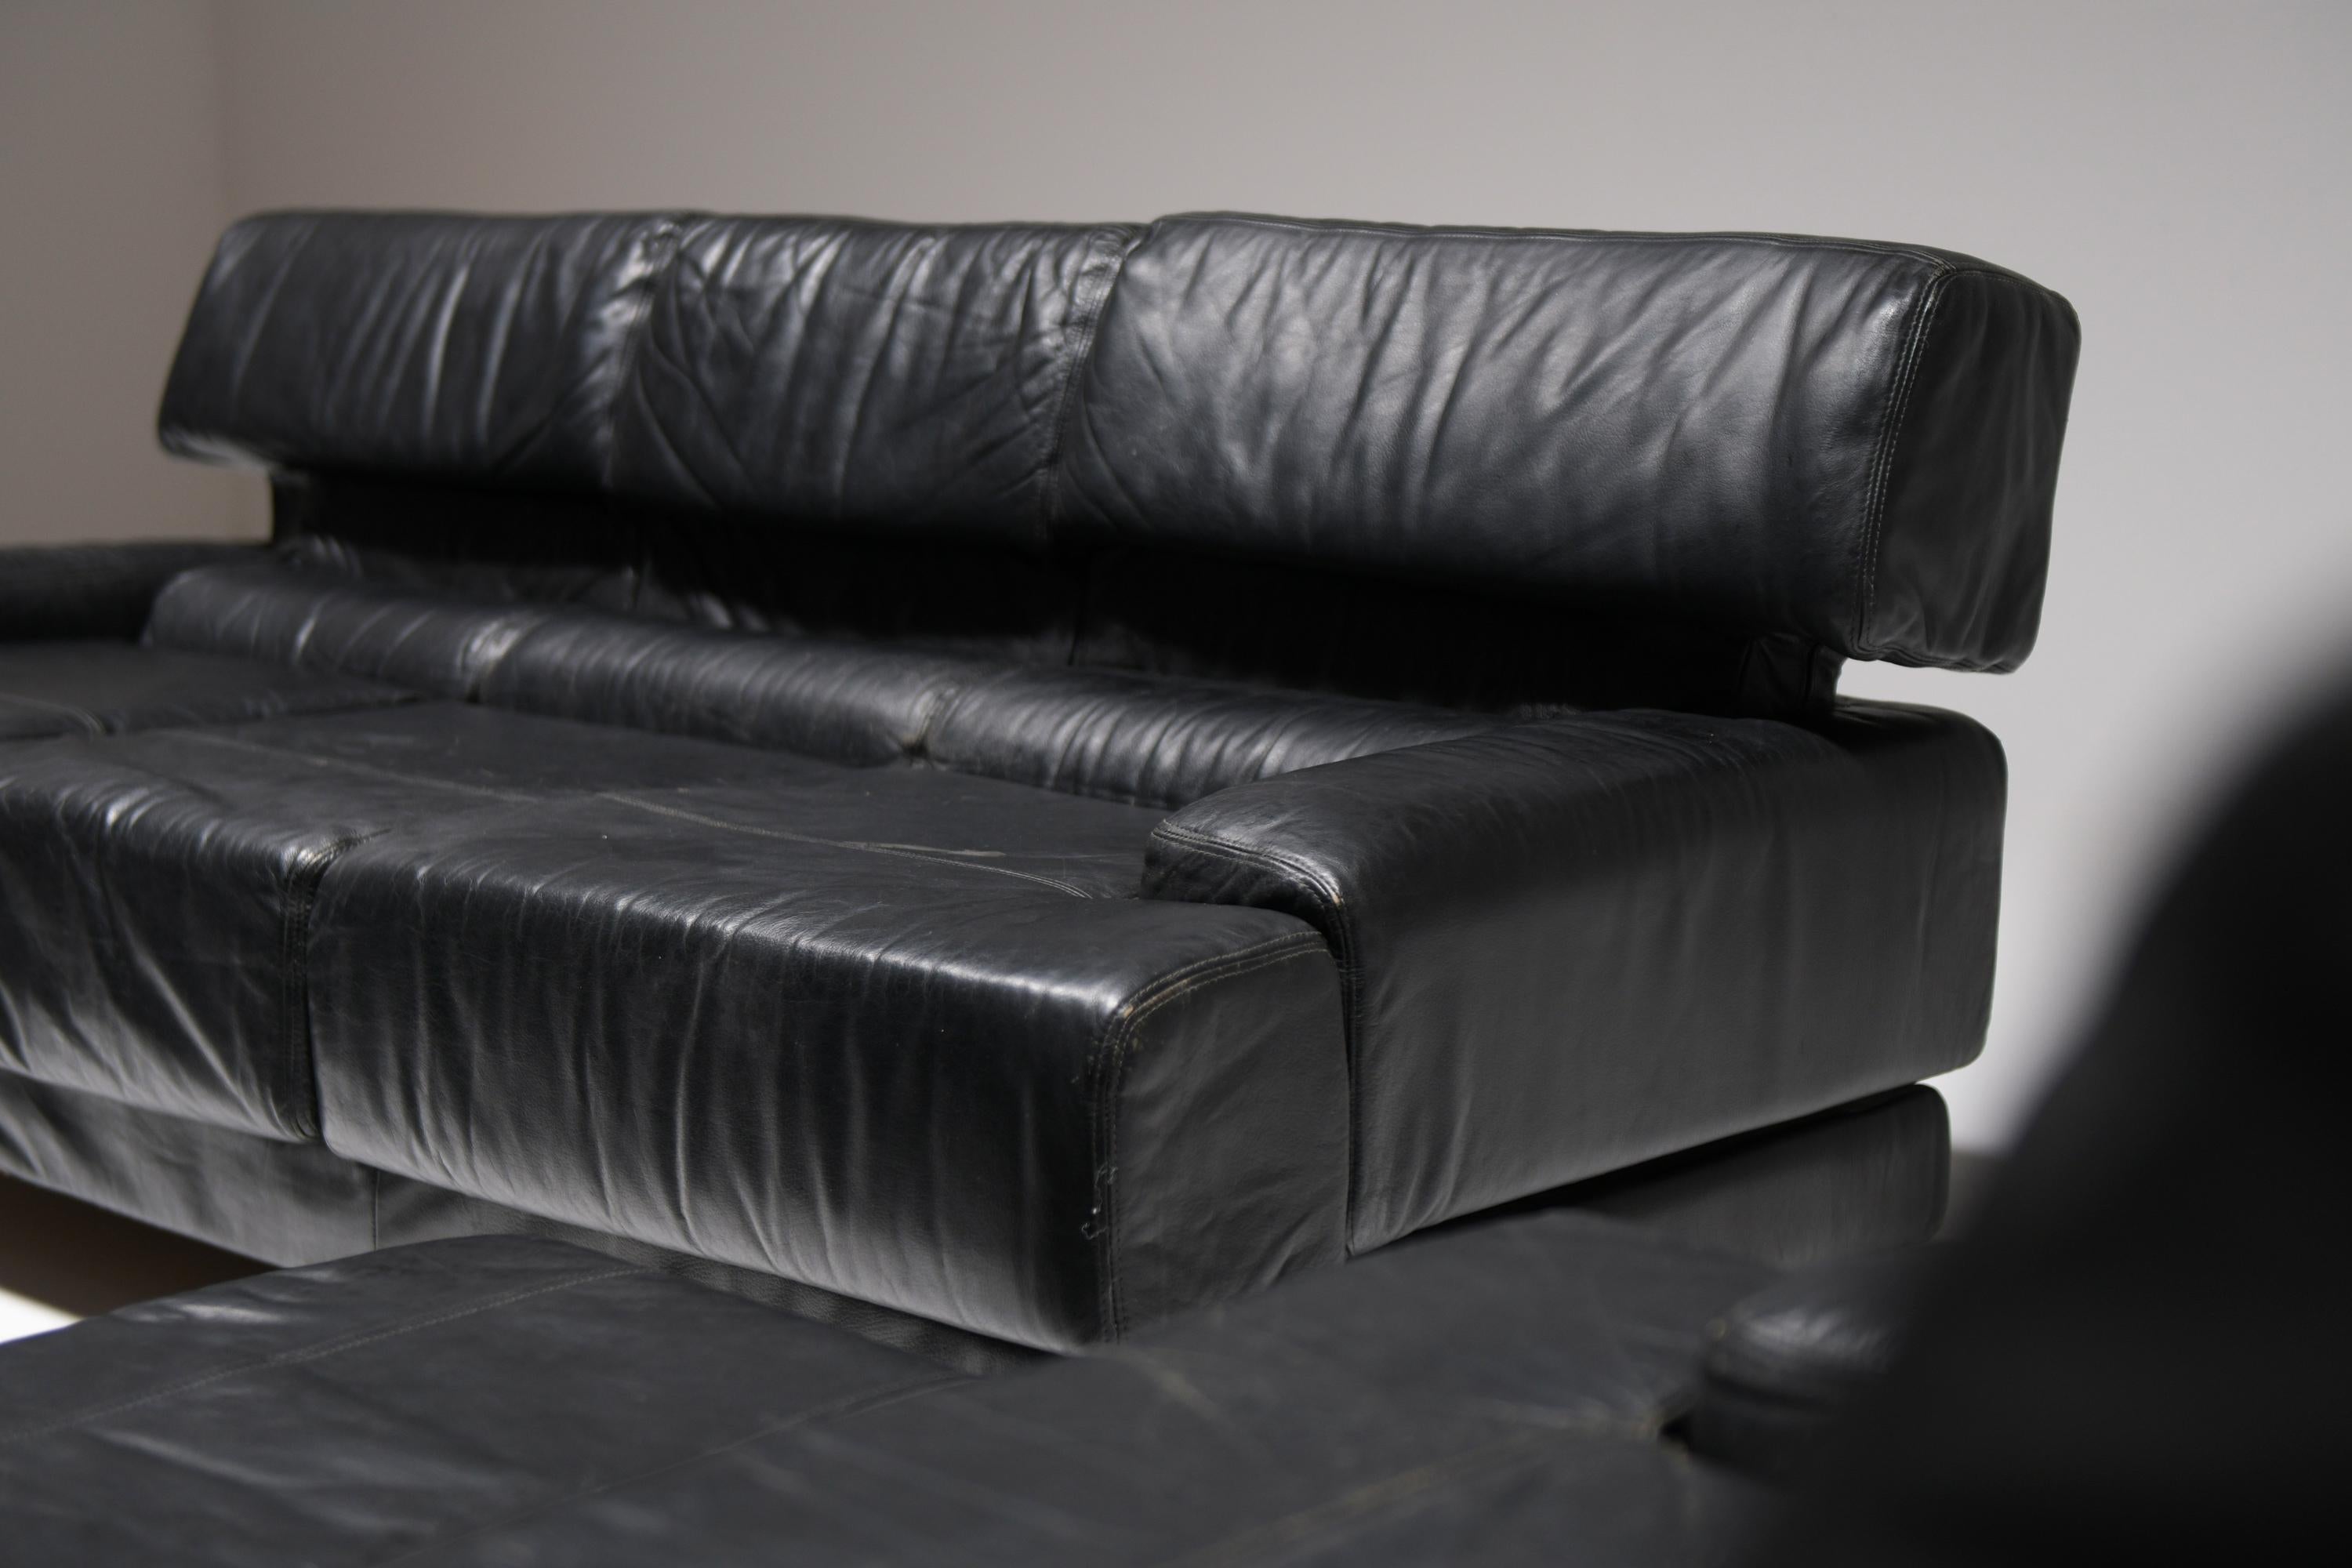 Atemberaubendes Percival Lafer-Sofa aus schwarzem Original-Leder - Lafer S.A. - Brasilien (Brasilianisch) im Angebot